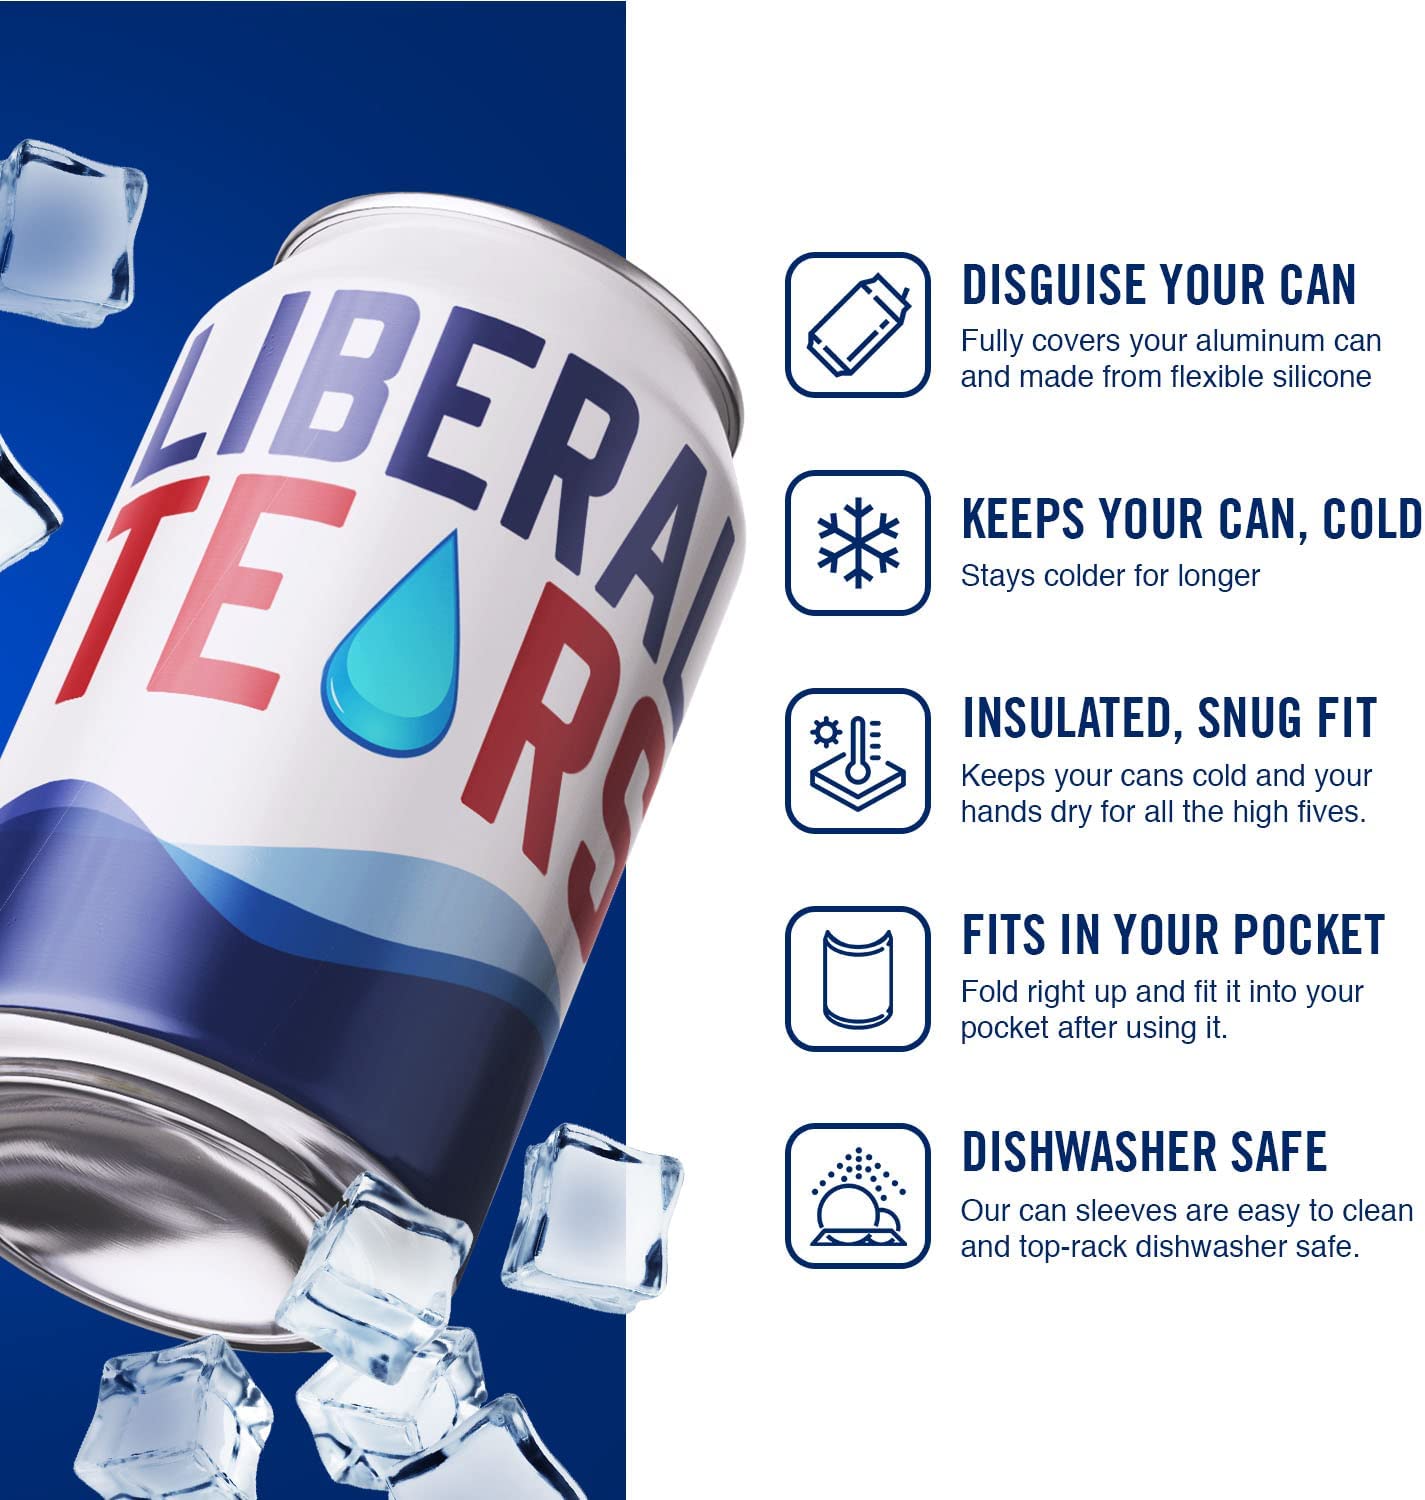 Liberal Tears Beersy Hide-a-Beer Can Cooler